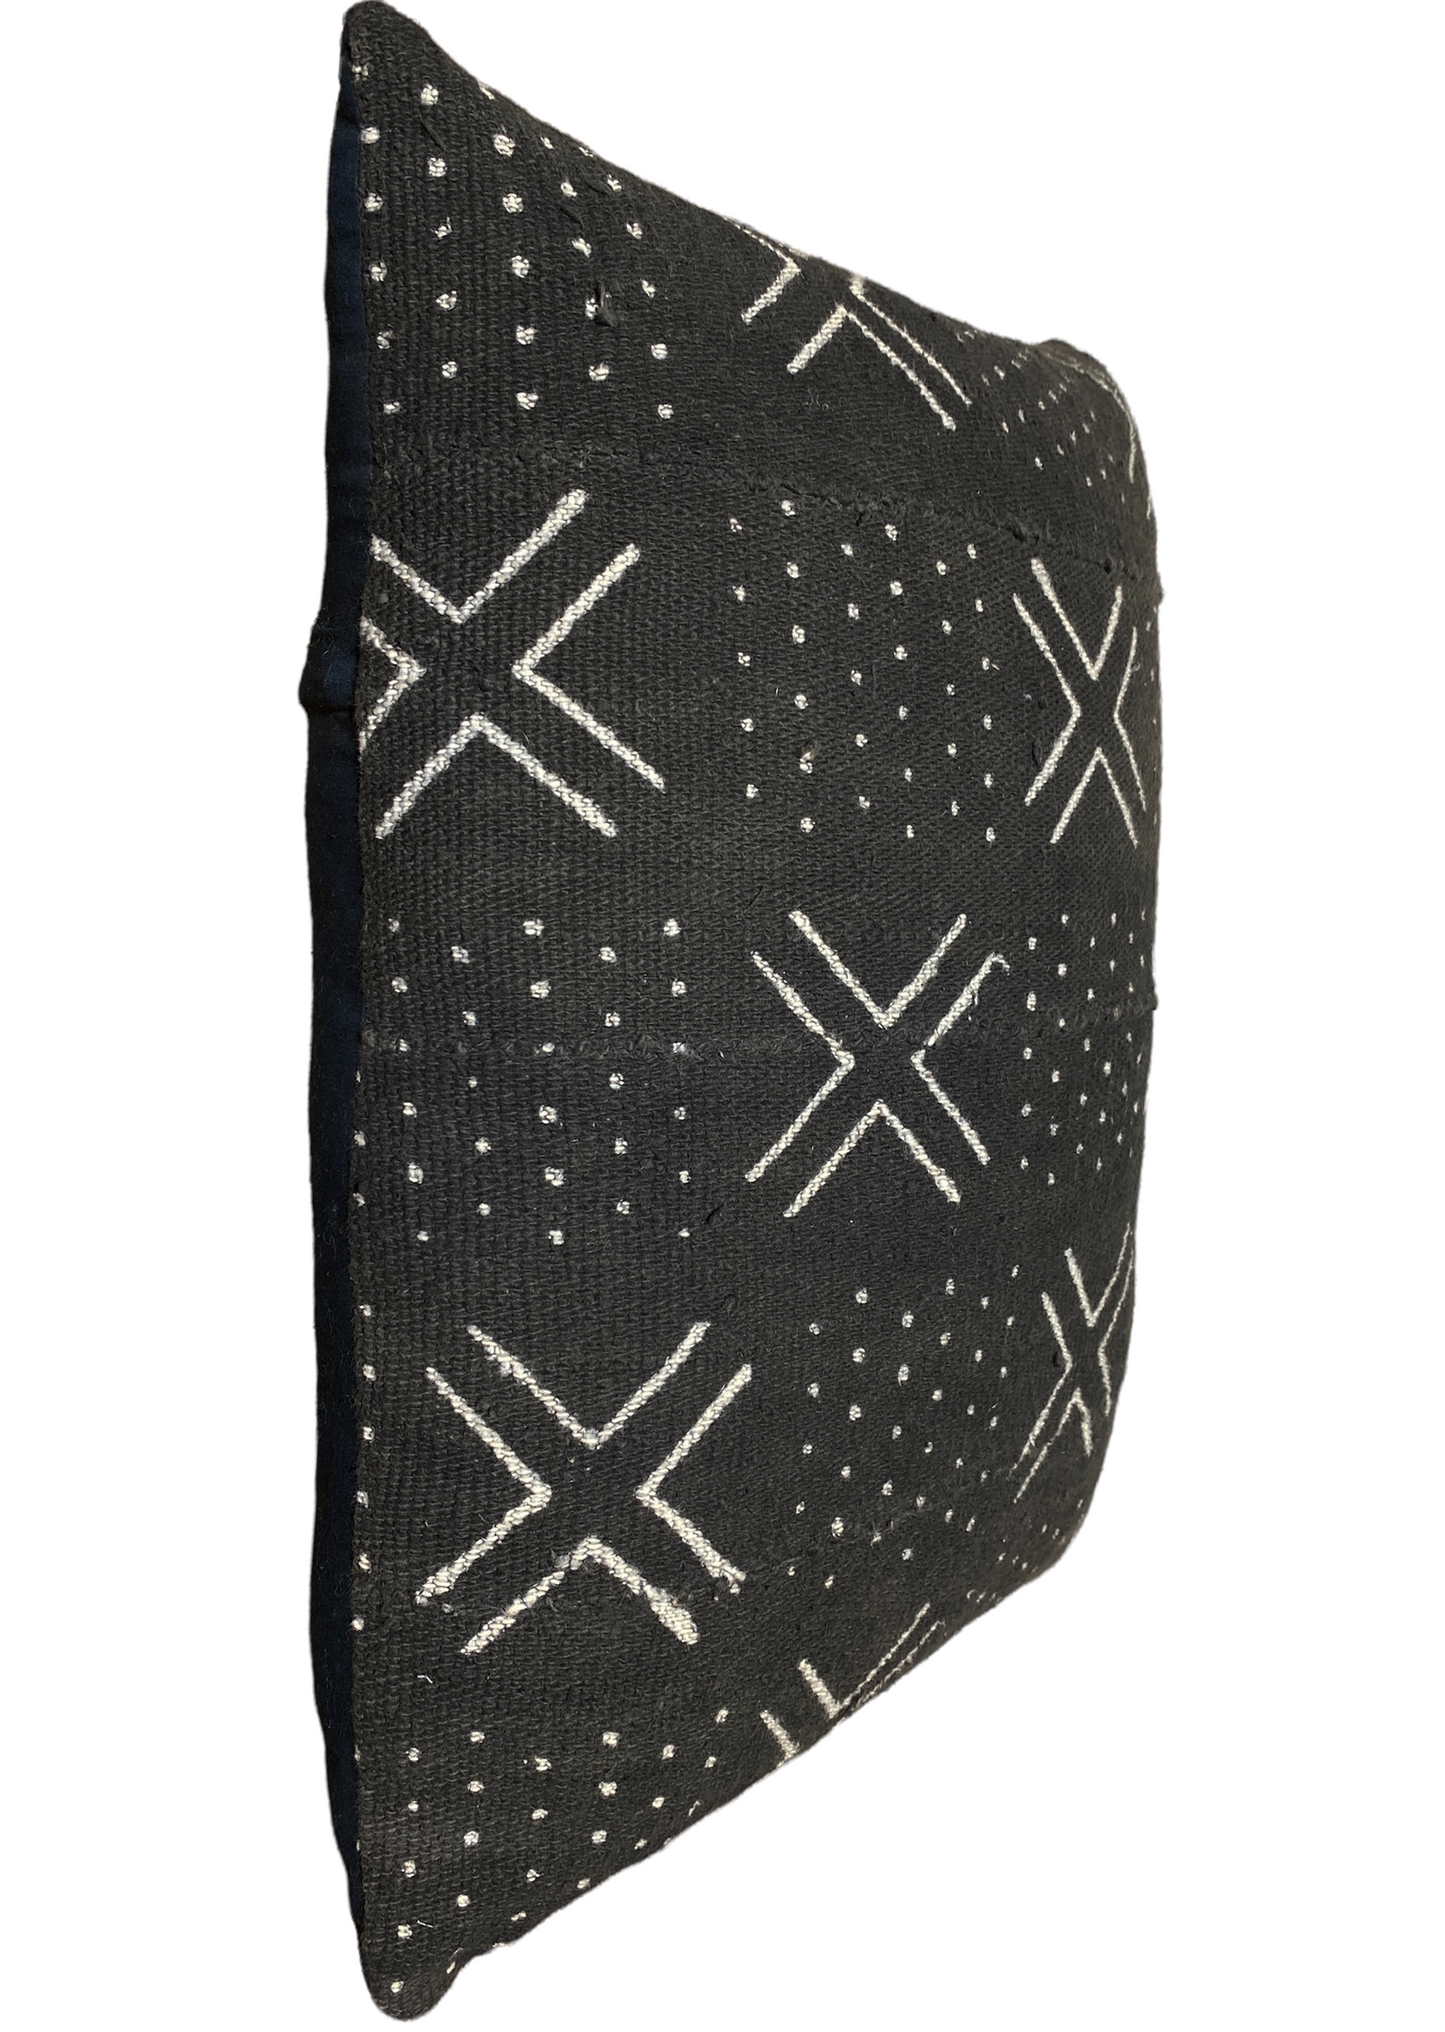 #4818 African Mud Cloth black & white pillow Mali 18.5" W